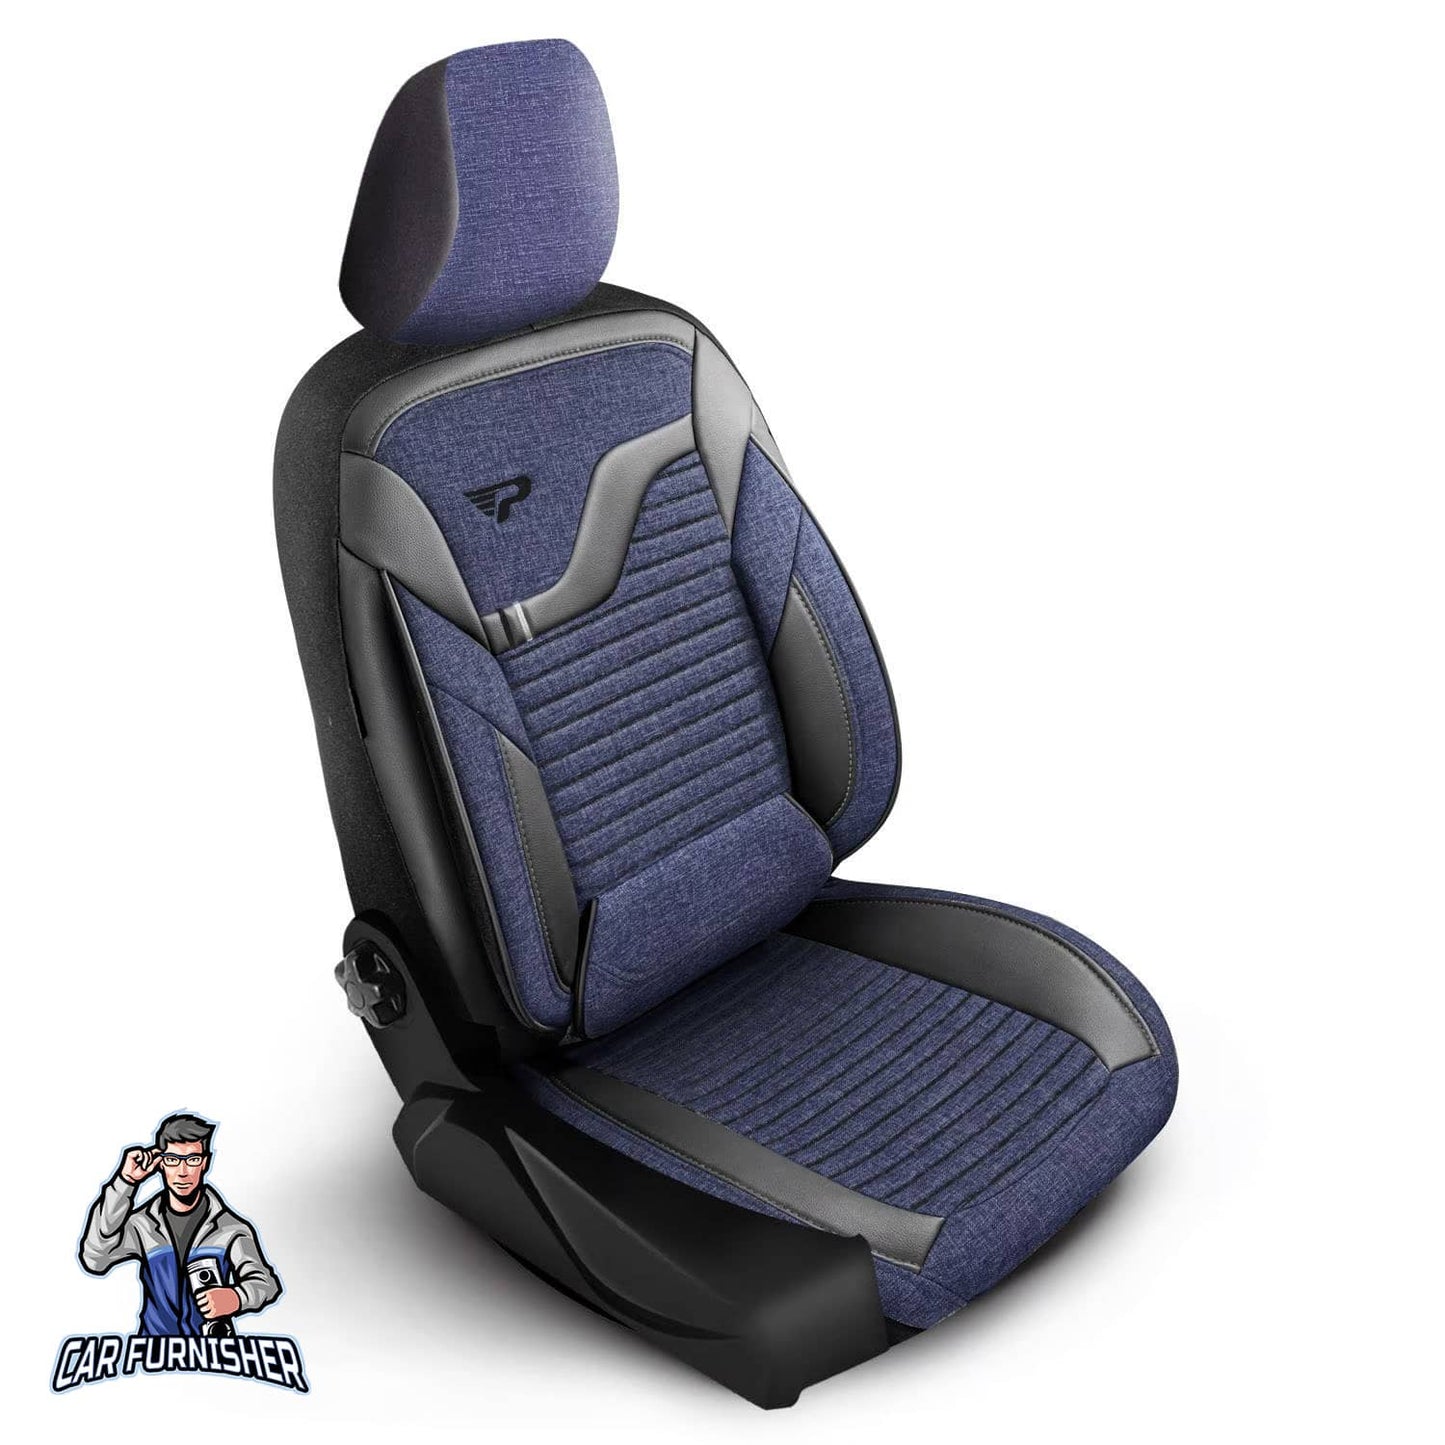 Car Seat Cover Set - Boston Design Blue 5 Seats + Headrests (Full Set) Leather & Linen Fabric